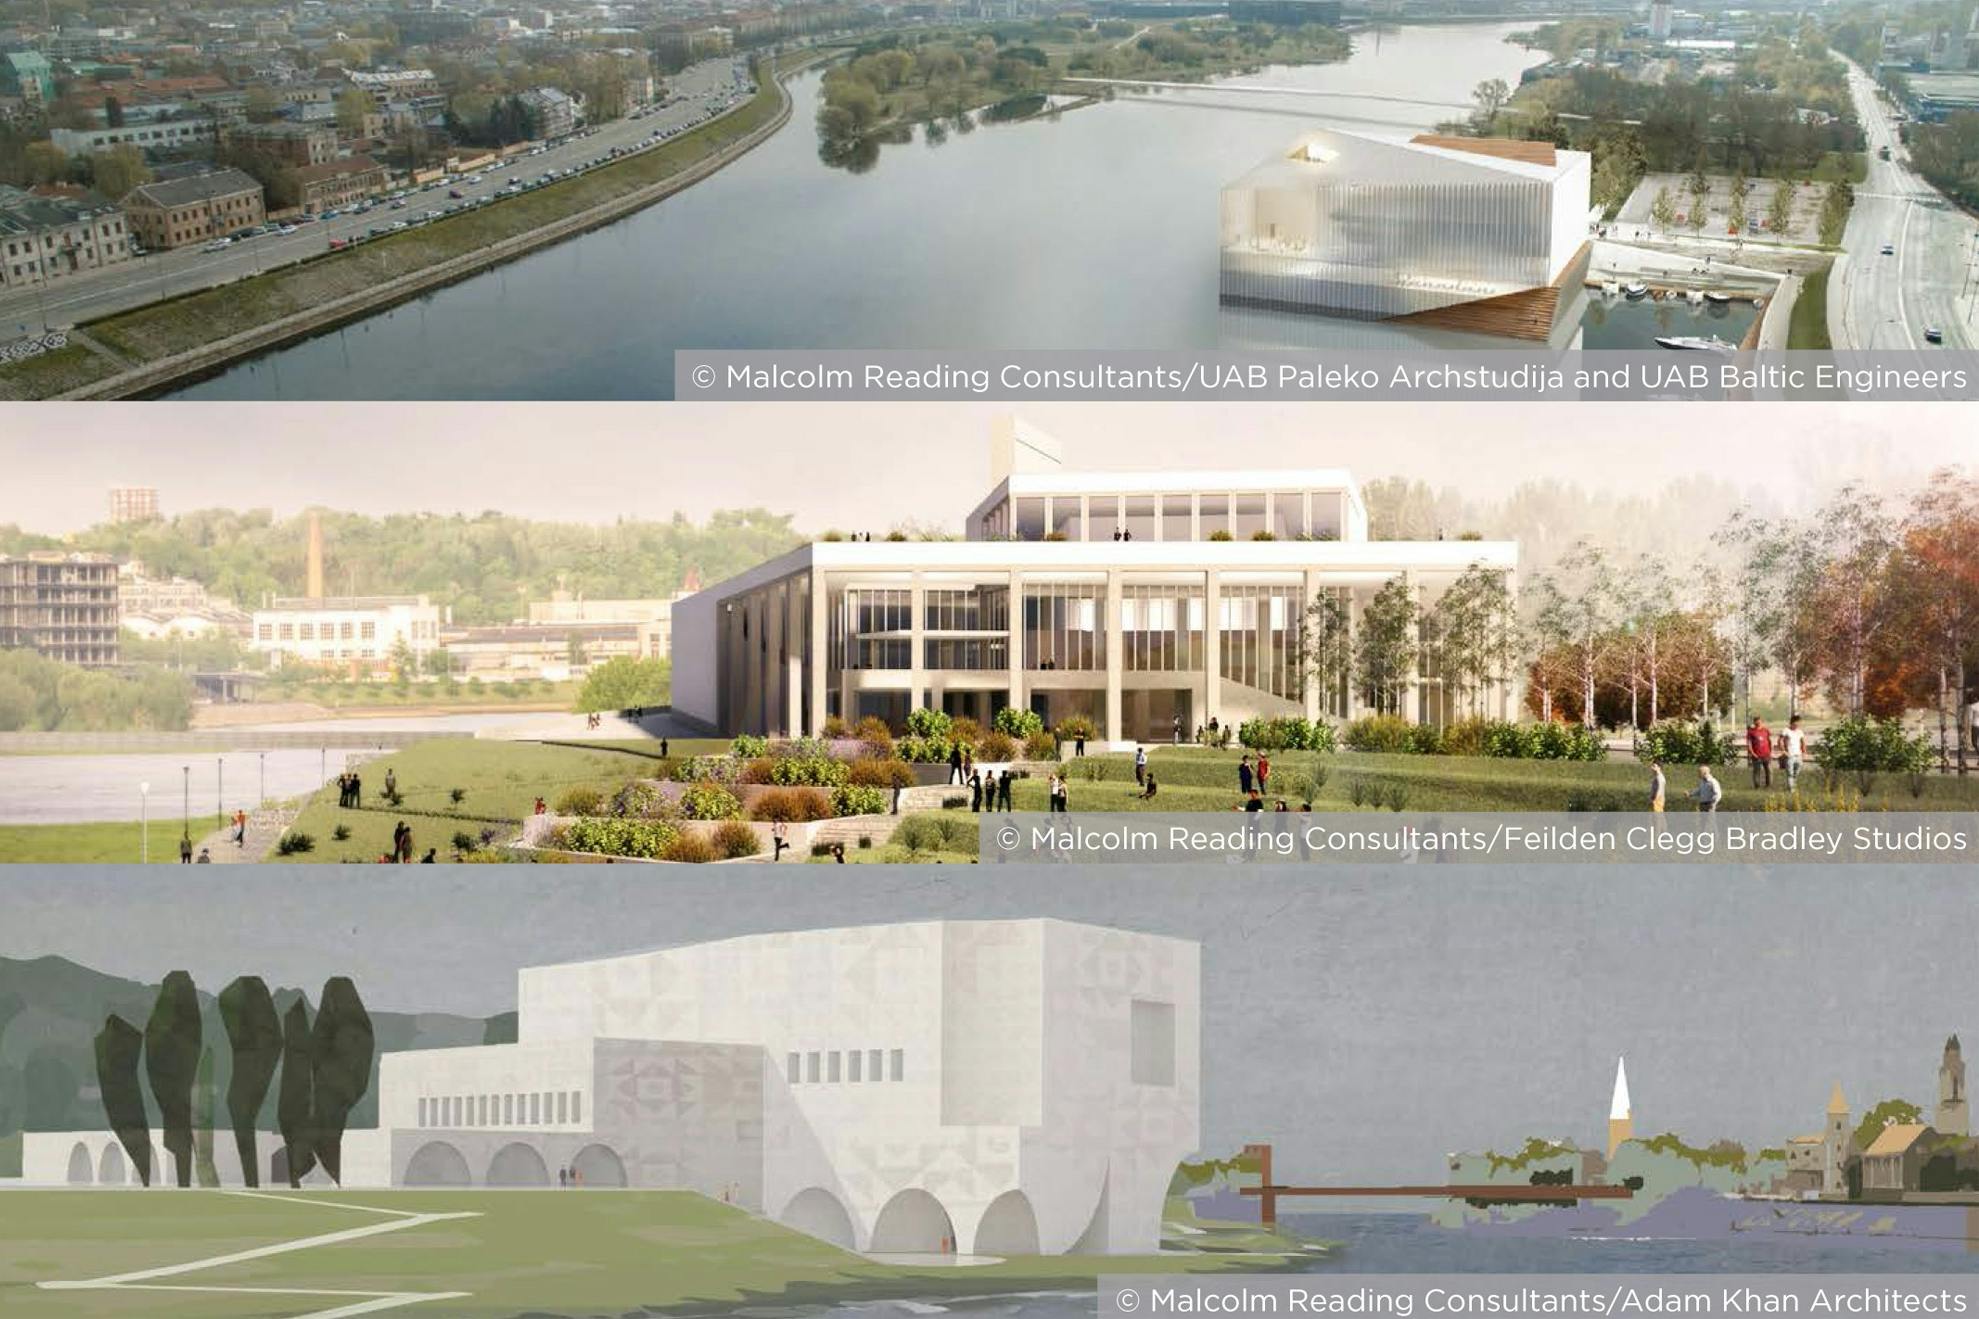 Die drei Finalisten: Paleko archstudija + UAB Baltic Engineers (oben) // Feilden Clegg Bradley Studios (mitte) // Adam Khan Architects (unten)